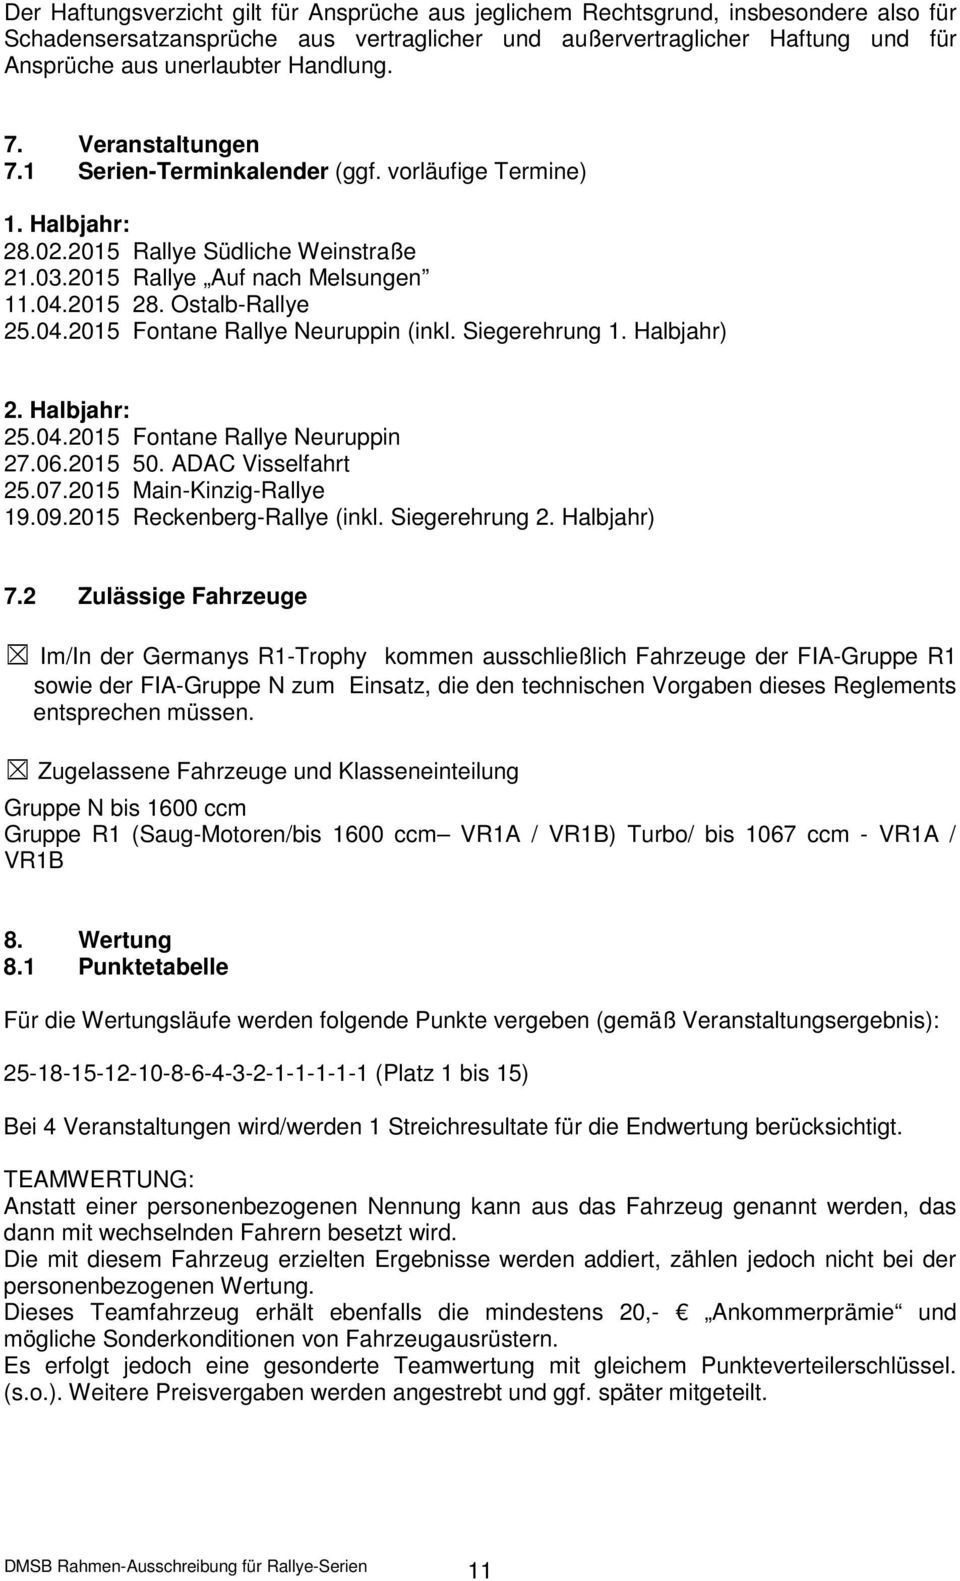 Ostalb-Rallye 25.04.2015 Fontane Rallye Neuruppin (inkl. Siegerehrung 1. Halbjahr) 2. Halbjahr: 25.04.2015 Fontane Rallye Neuruppin 27.06.2015 50. ADAC Visselfahrt 25.07.2015 Main-Kinzig-Rallye 19.09.